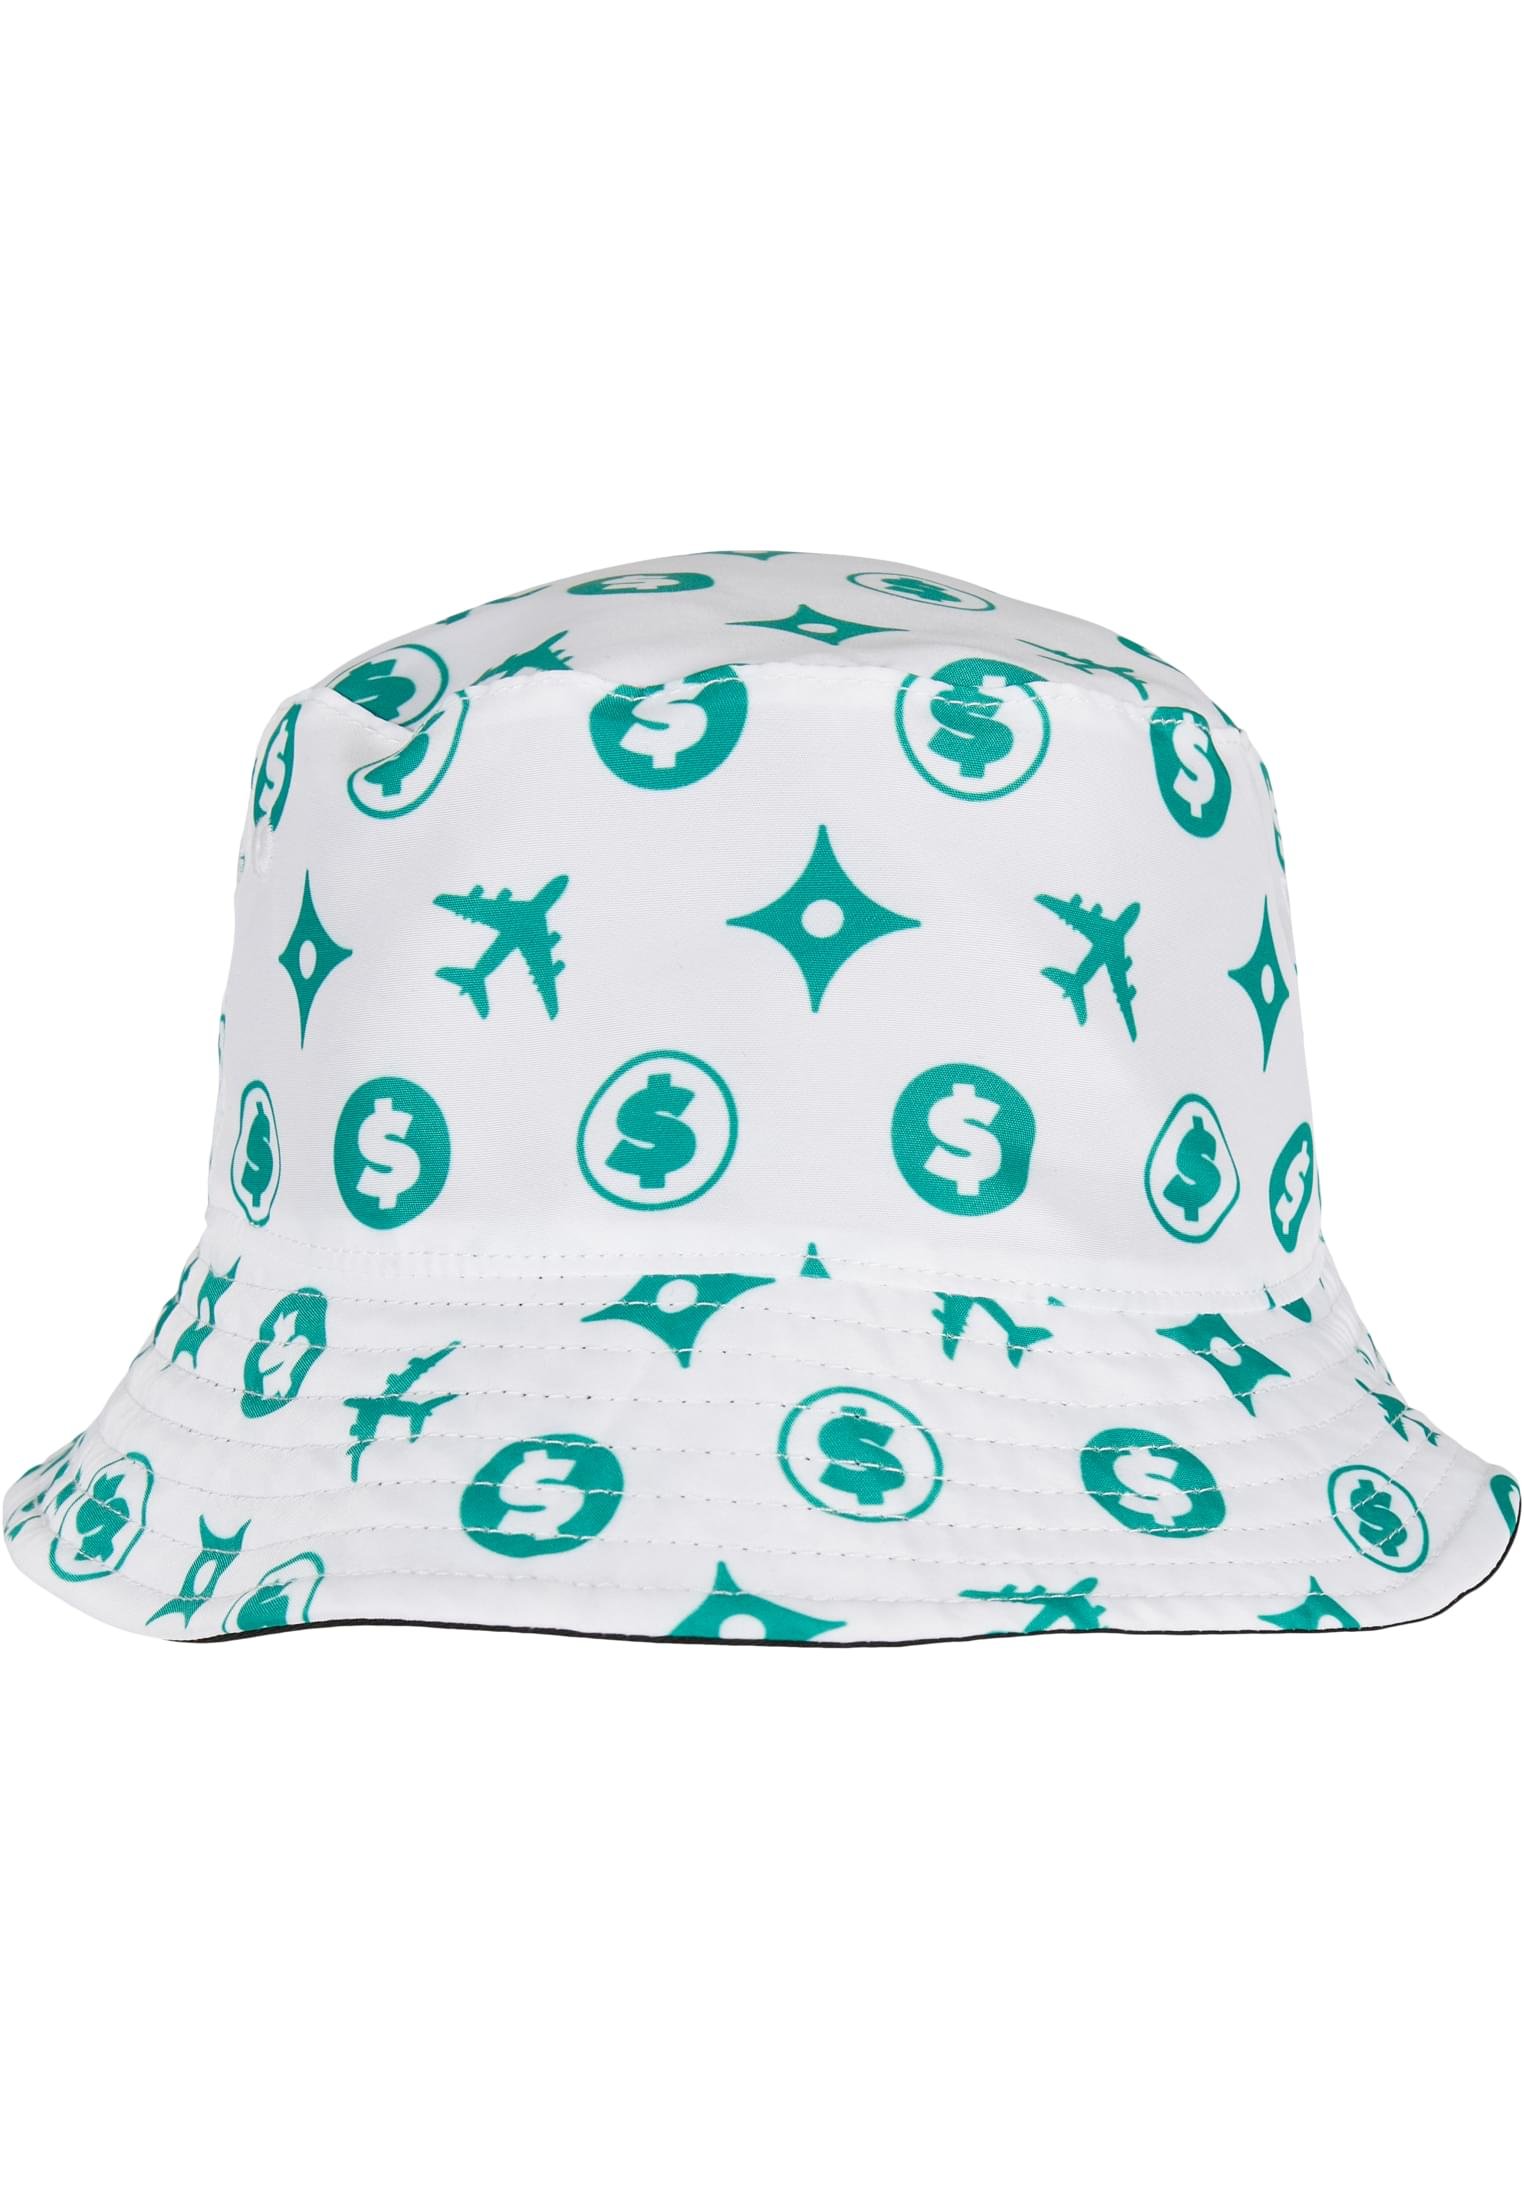 L Voyage Reversible Bucket Hat white/mc one size